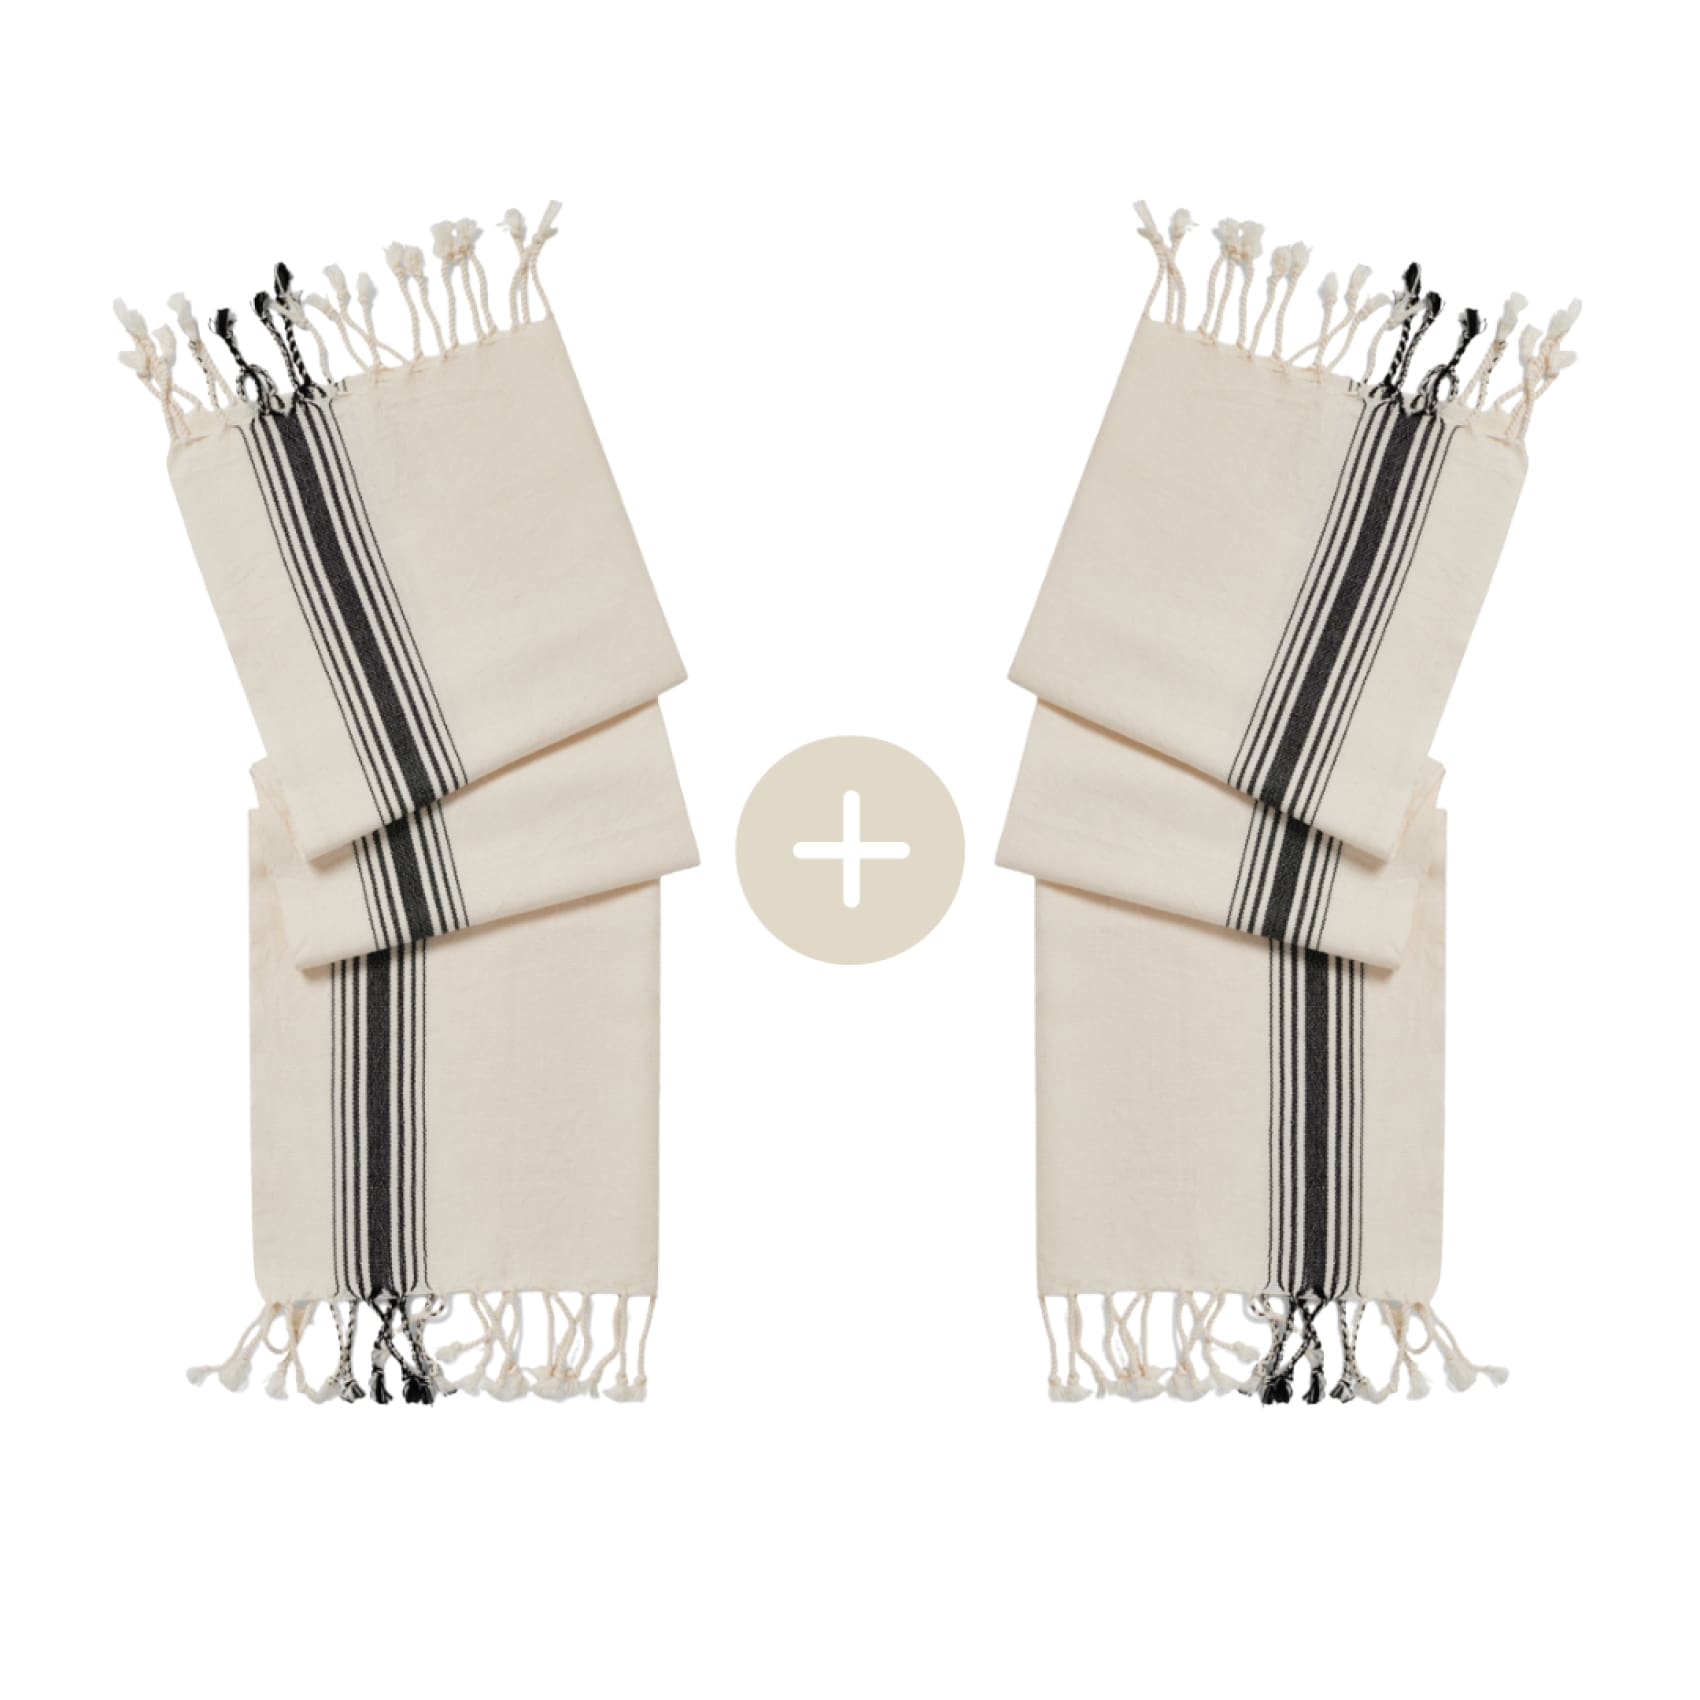 bergama-cotton-hand-towel-set-save-5-bundle-bundles-duo-luks-linen-shorts-fashion-accessory-531.jpg